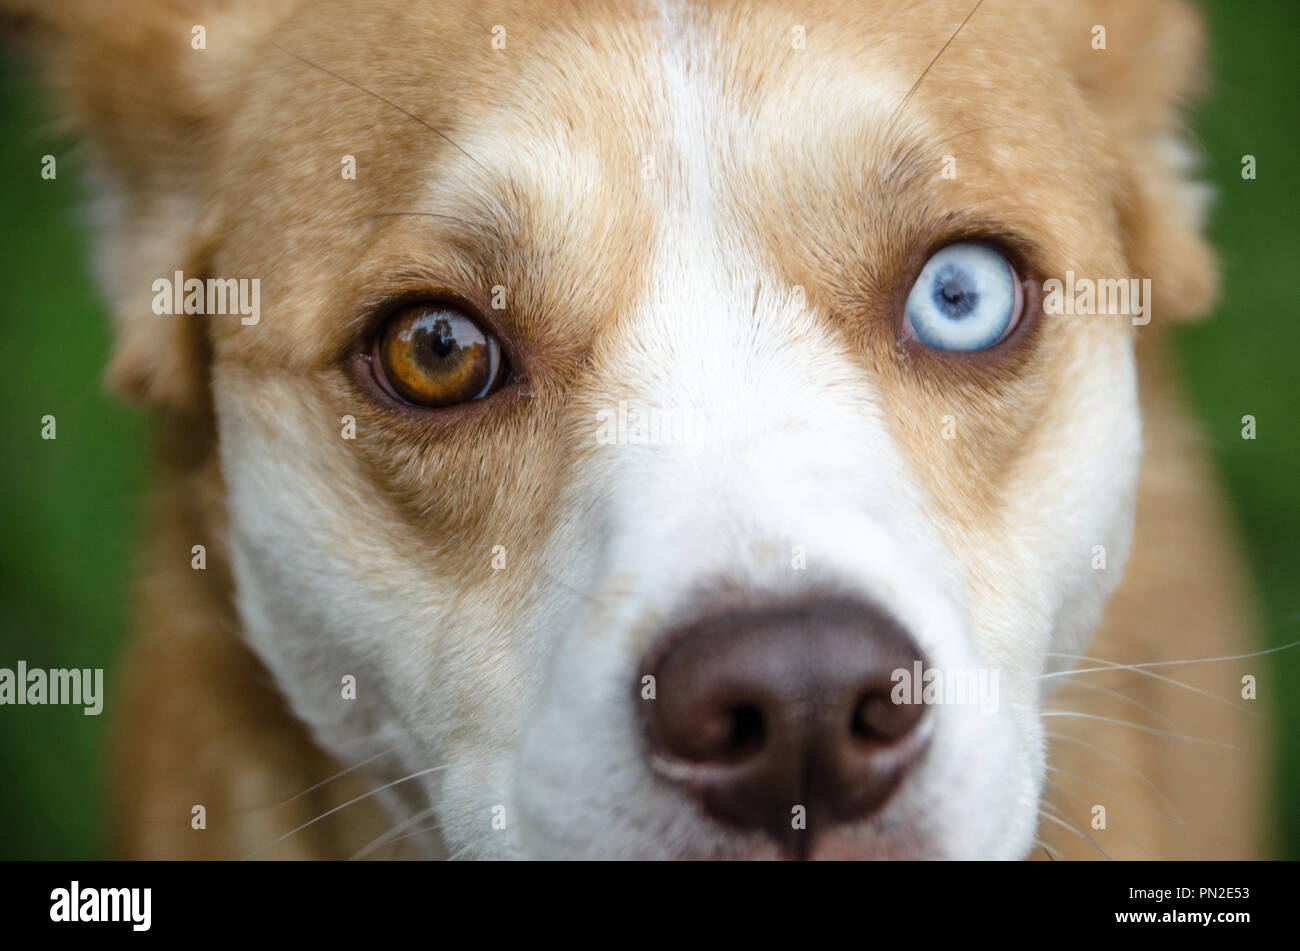 Portrait shot of dog looking at camera Stock Photo